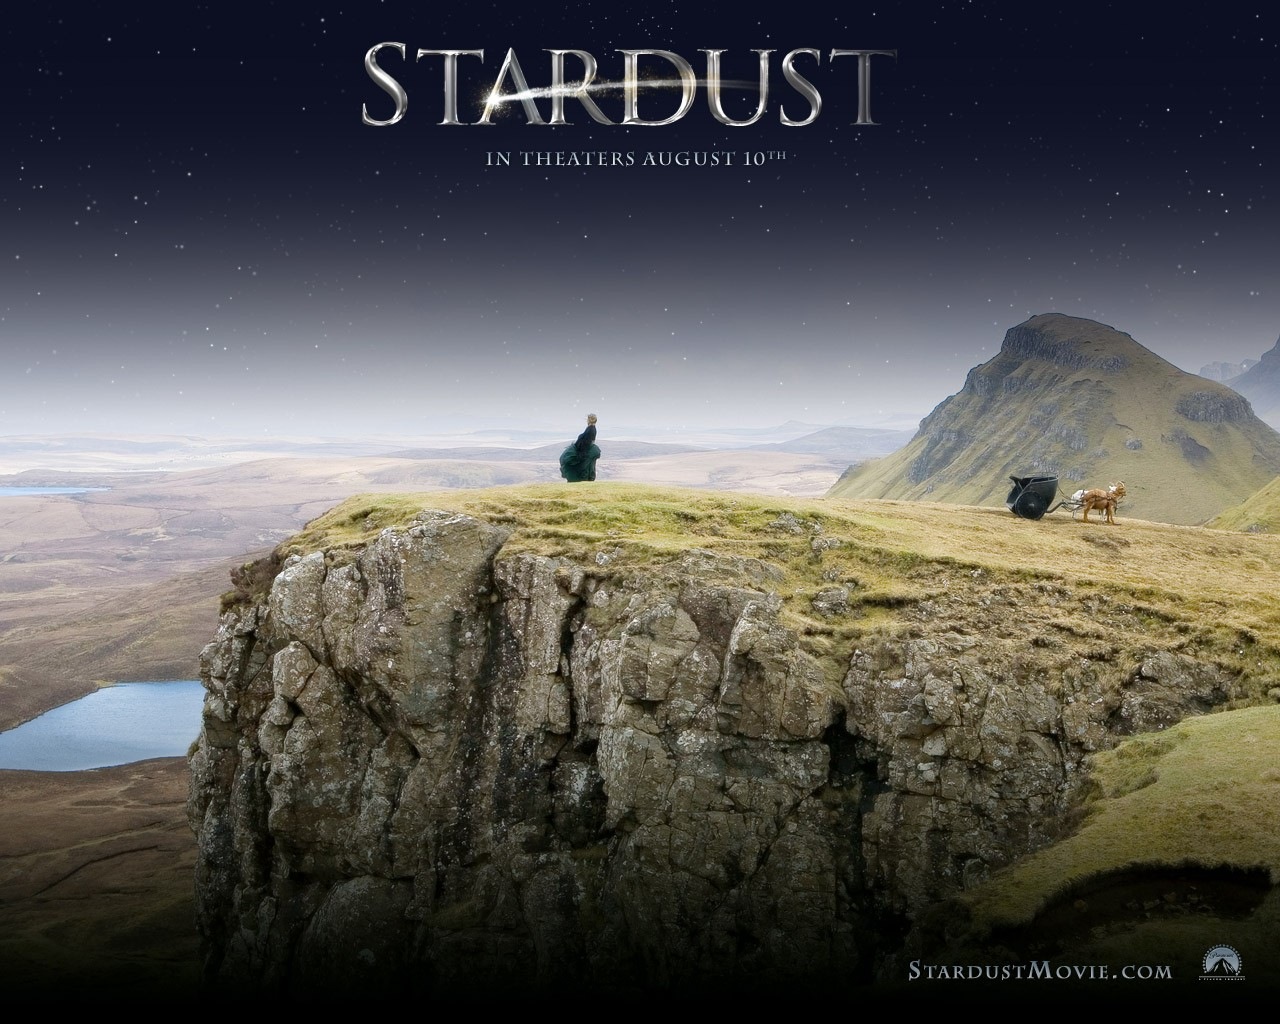 Desktop Wallpapers - Stardust - Movie | Free Desktop Backgrounds ...